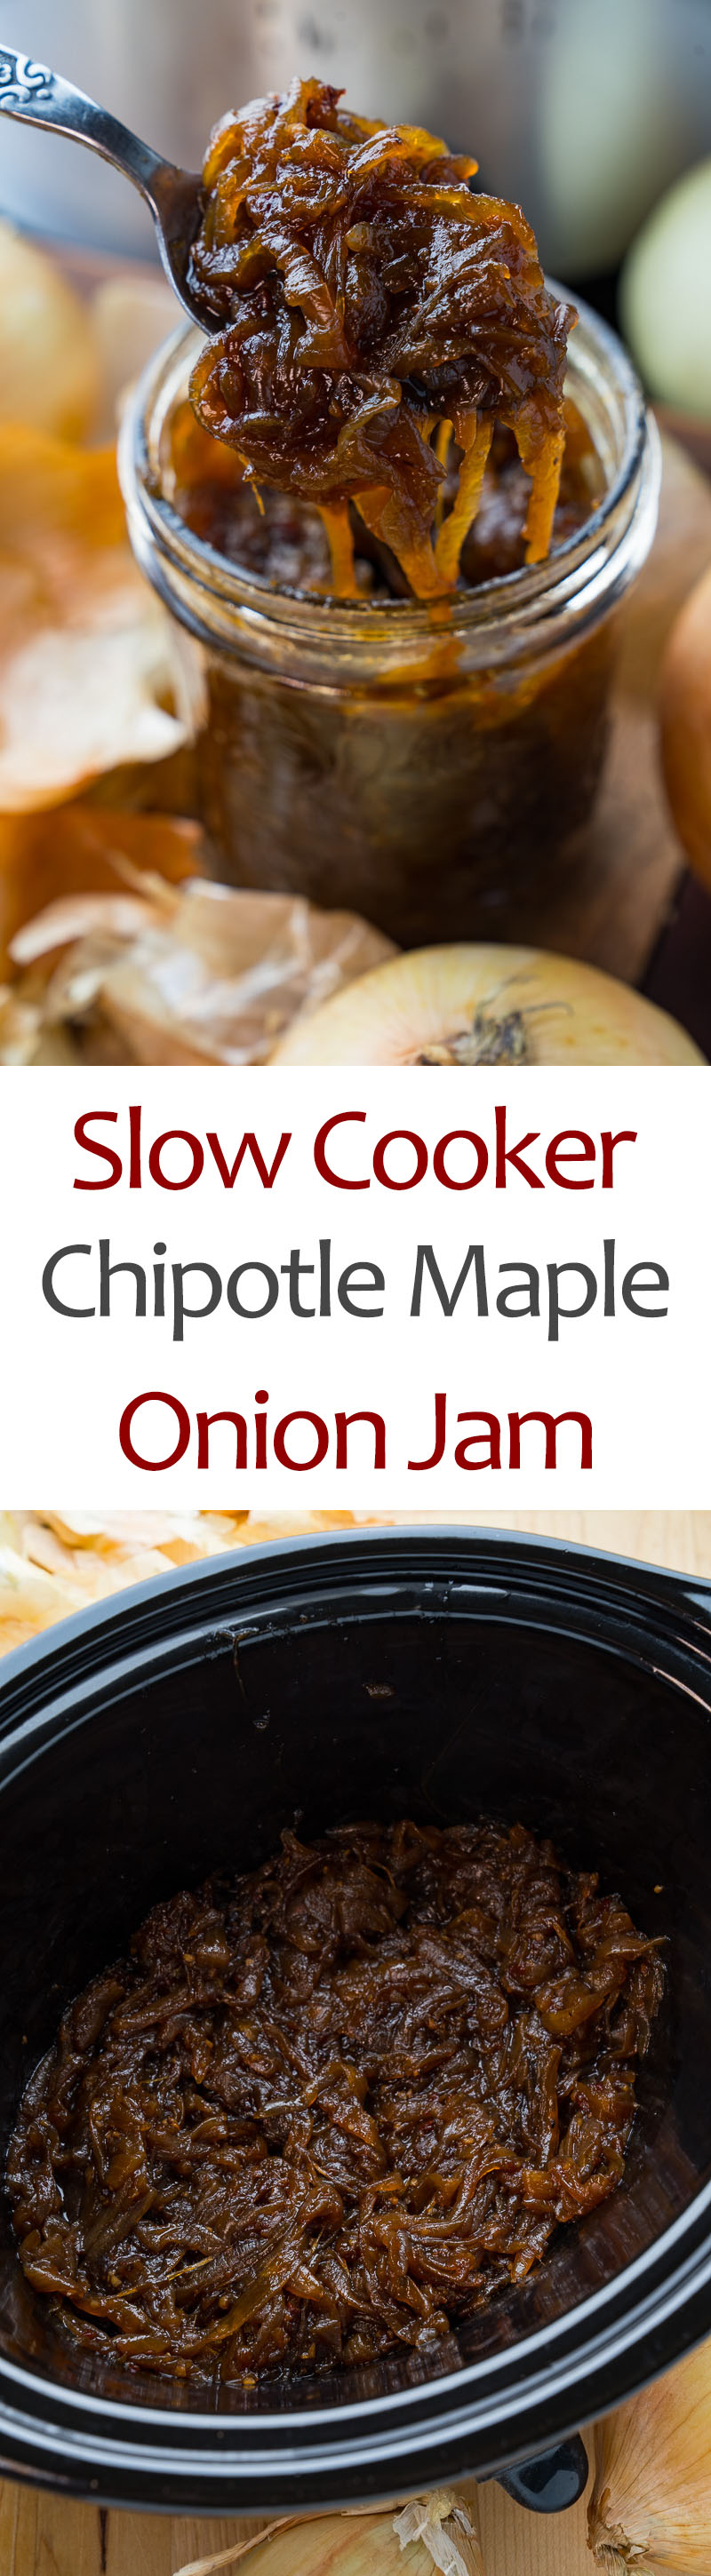 Slow Cooker Chipotle Maple Onion Jam